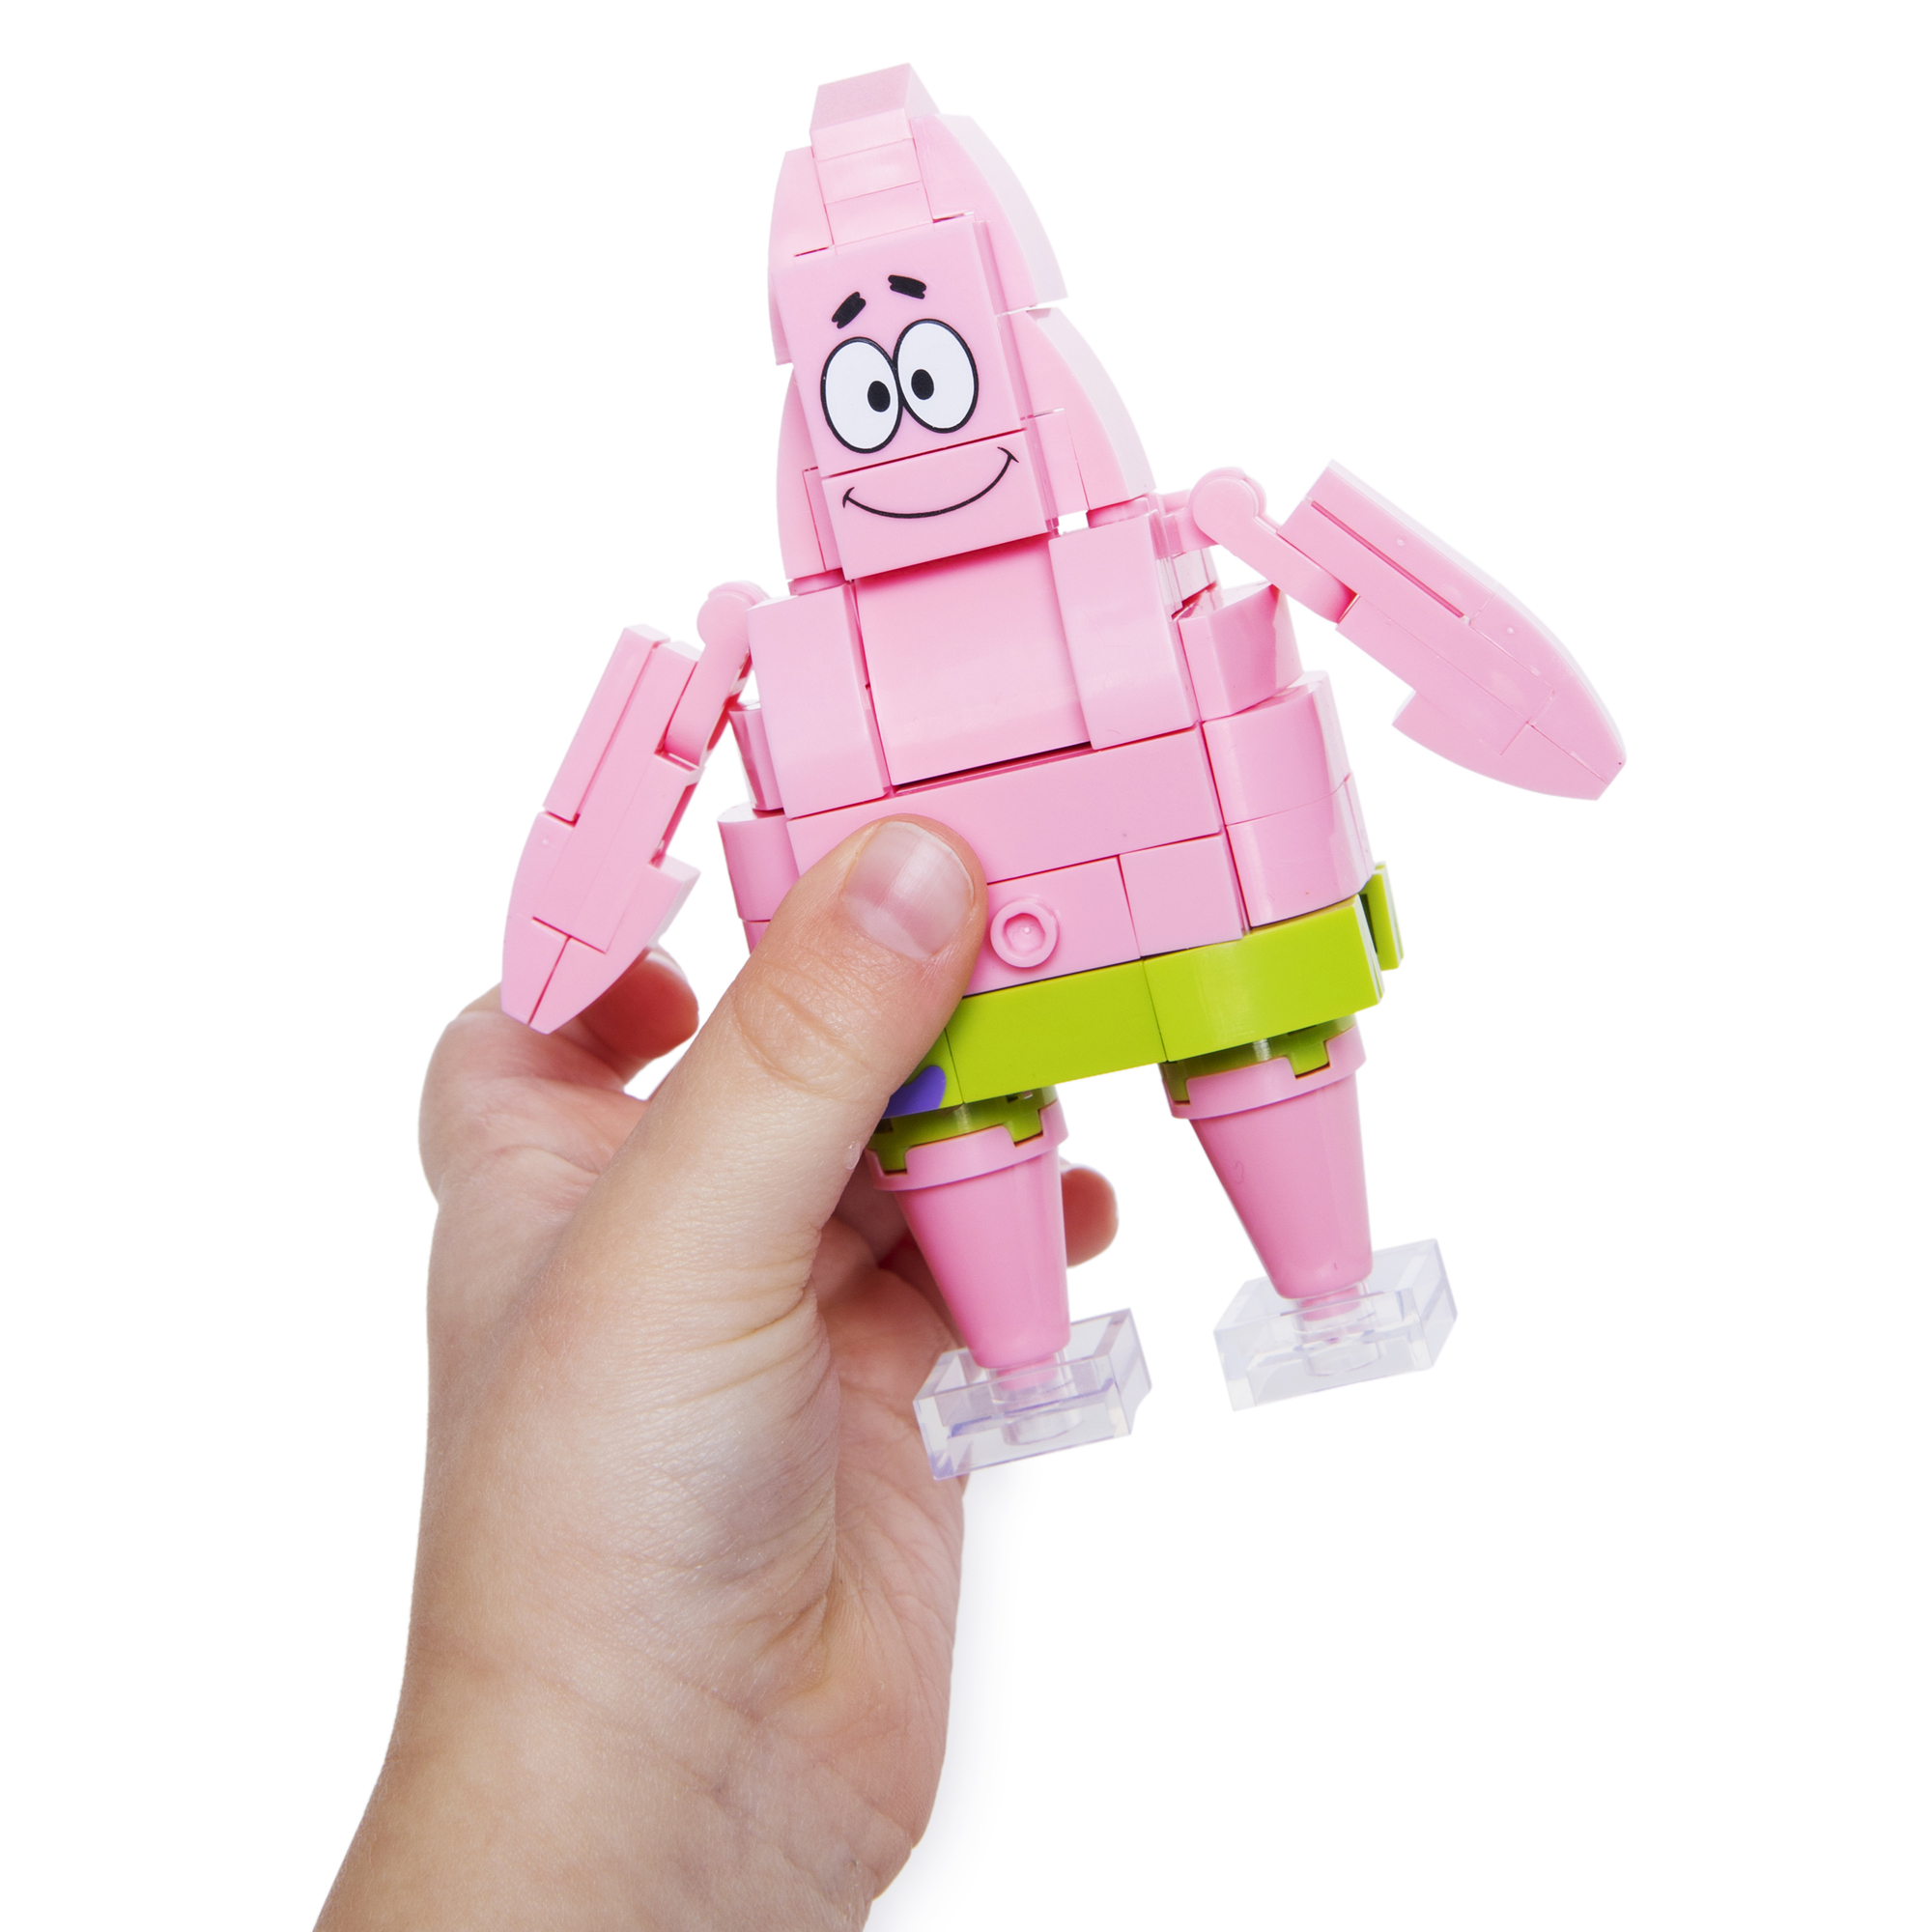 Spongebob Squarepants™ Build-It Figure